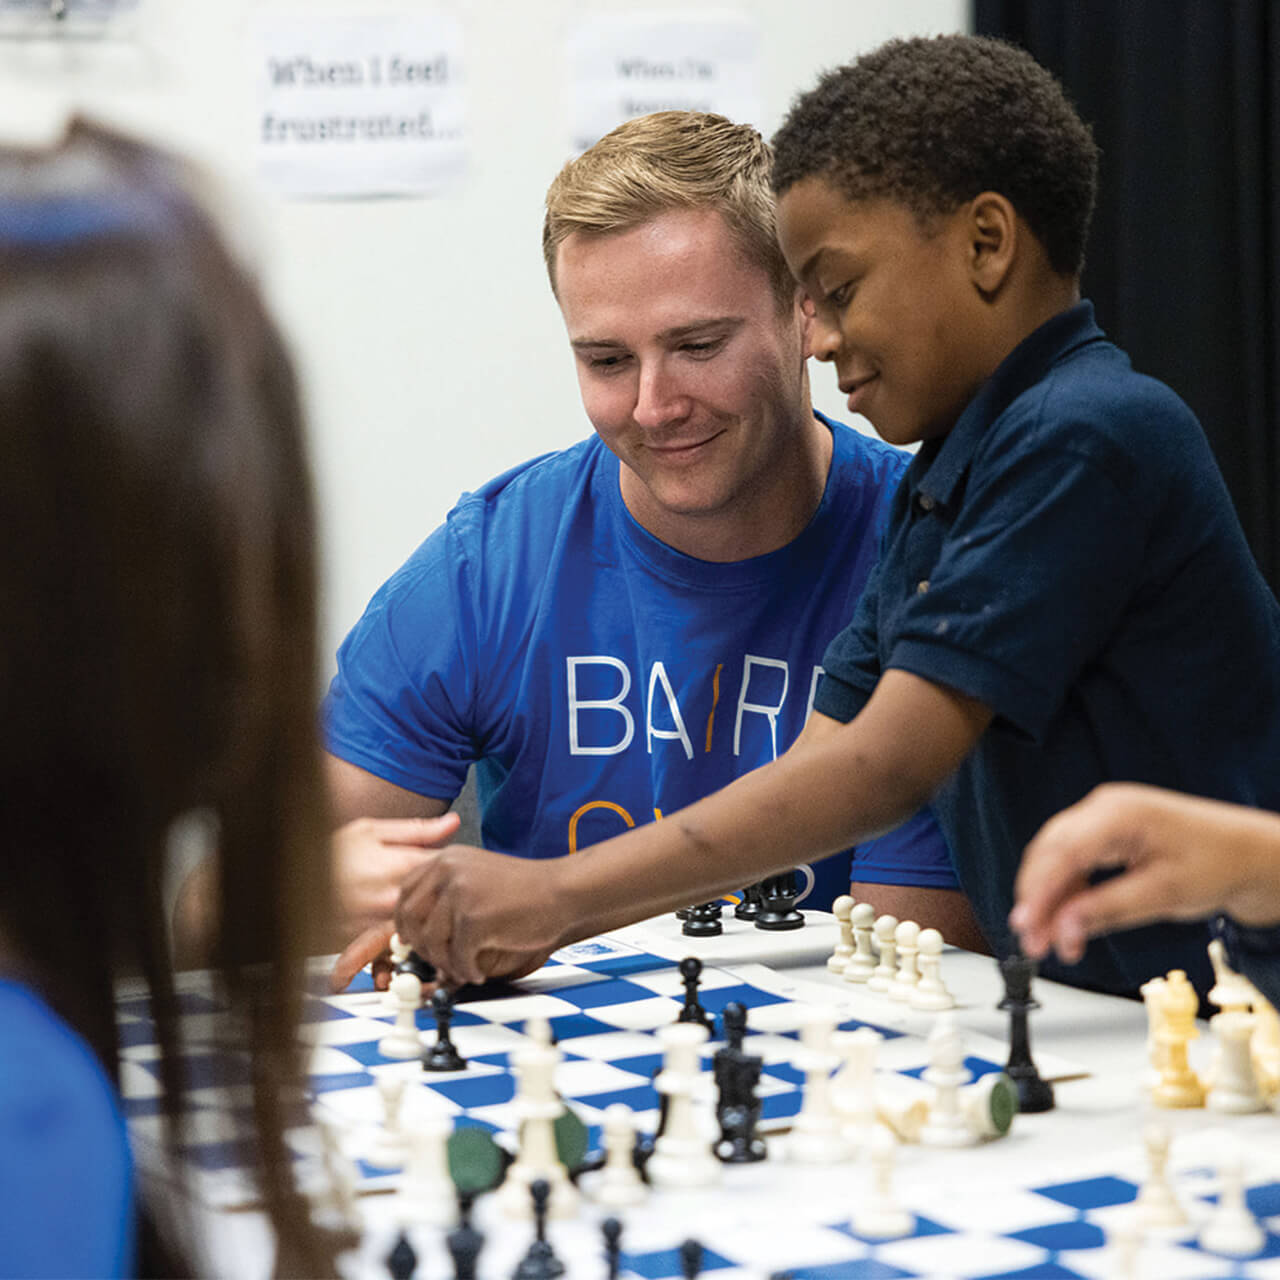 Baird associates volunteer at Chicago Chess Foundation